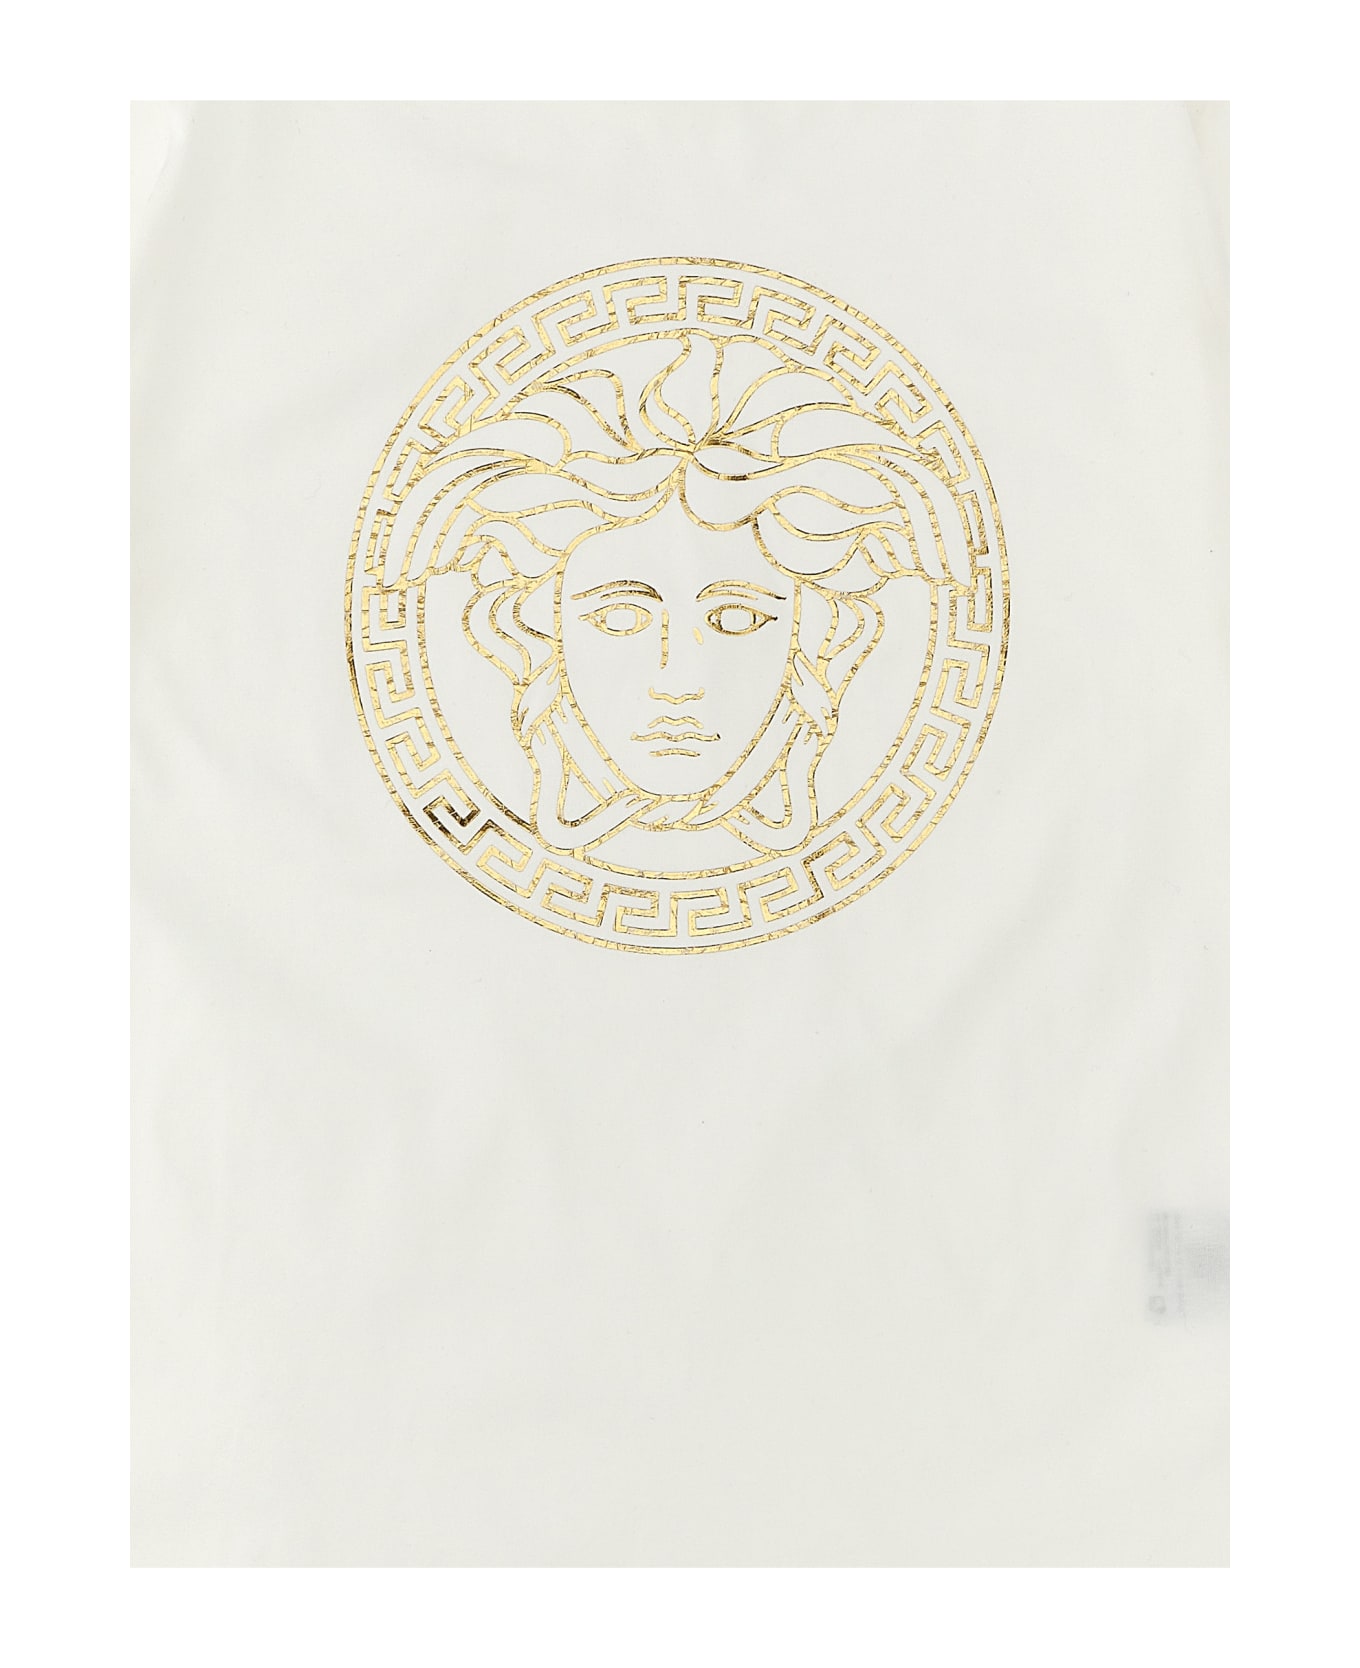 Versace Logo Print T-shirt - Bianco